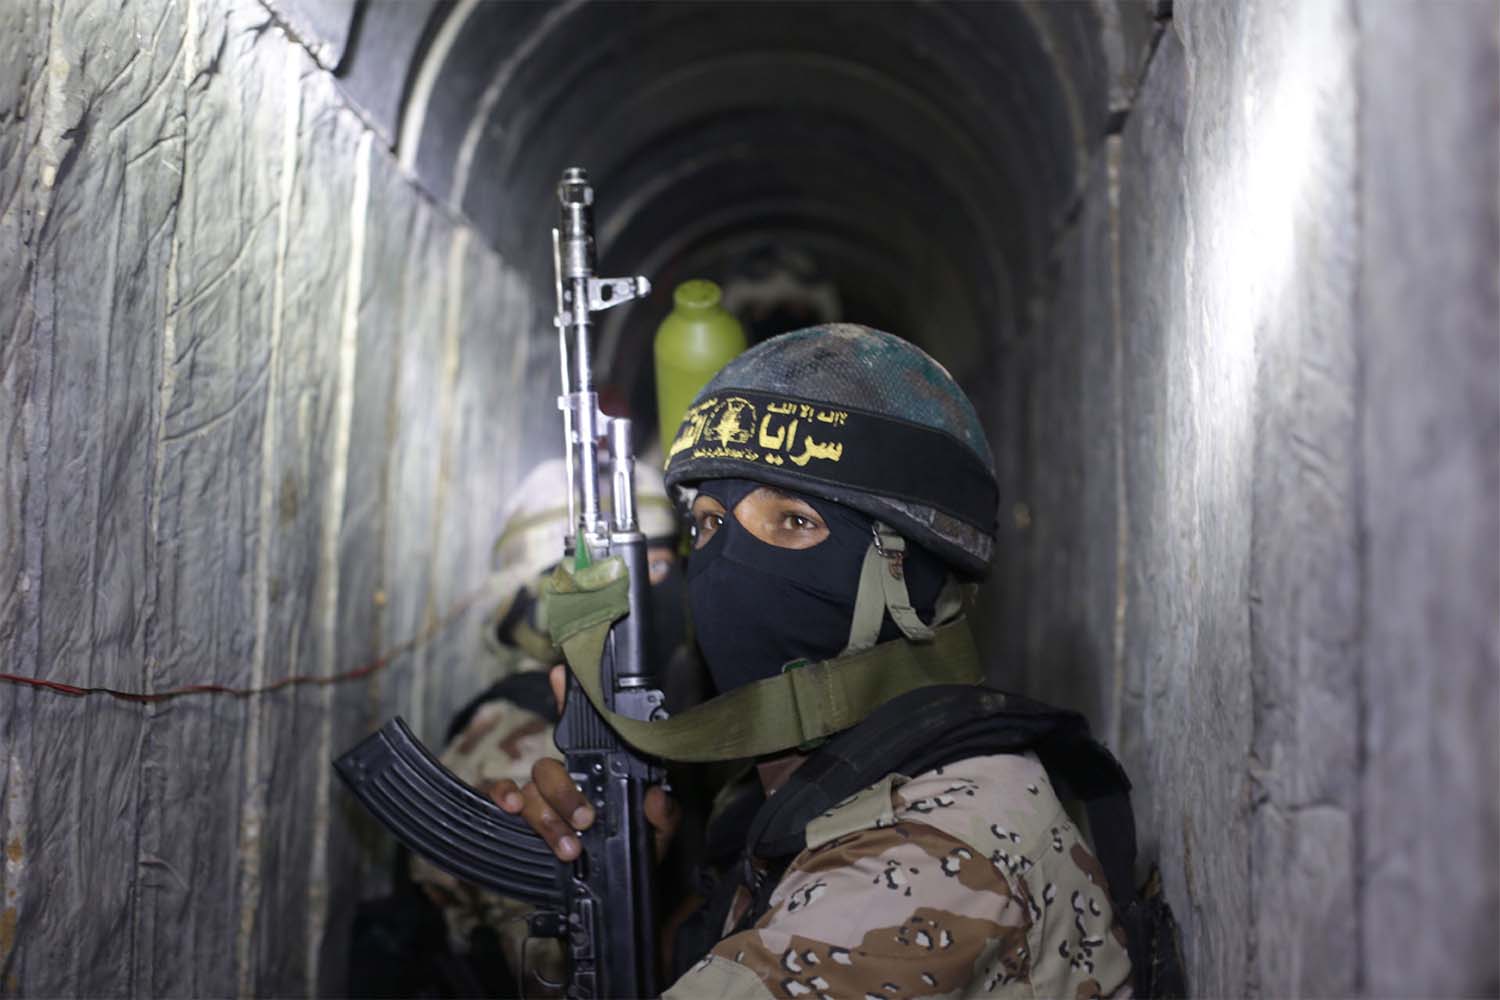 alestinian militants from the Islamic Jihad's armed wing, the Al-Quds Brigades